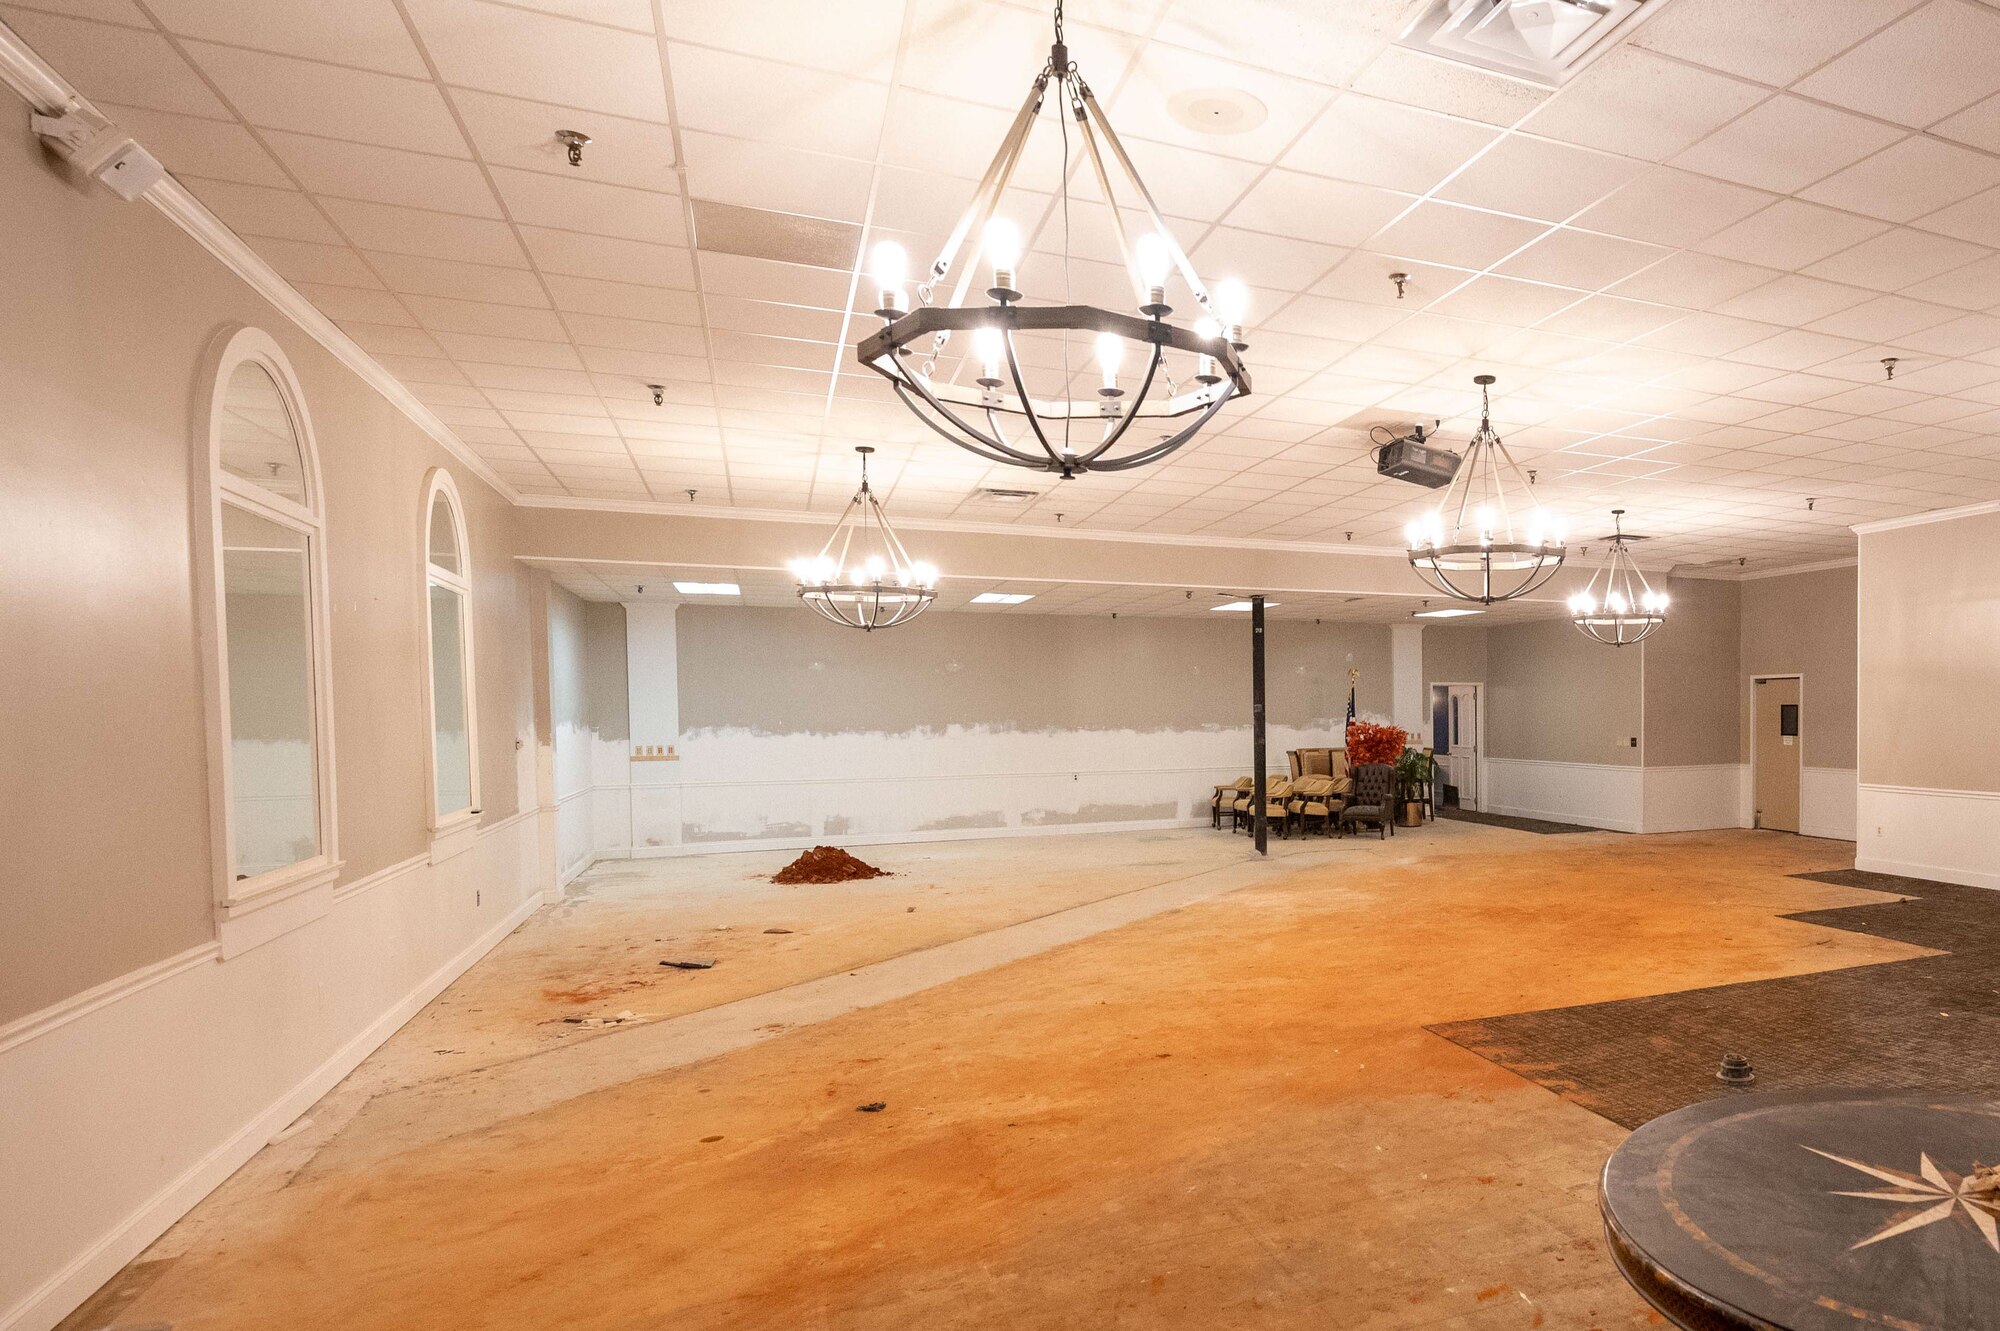 The ballroom at the Carolina Skies Club is under construction.